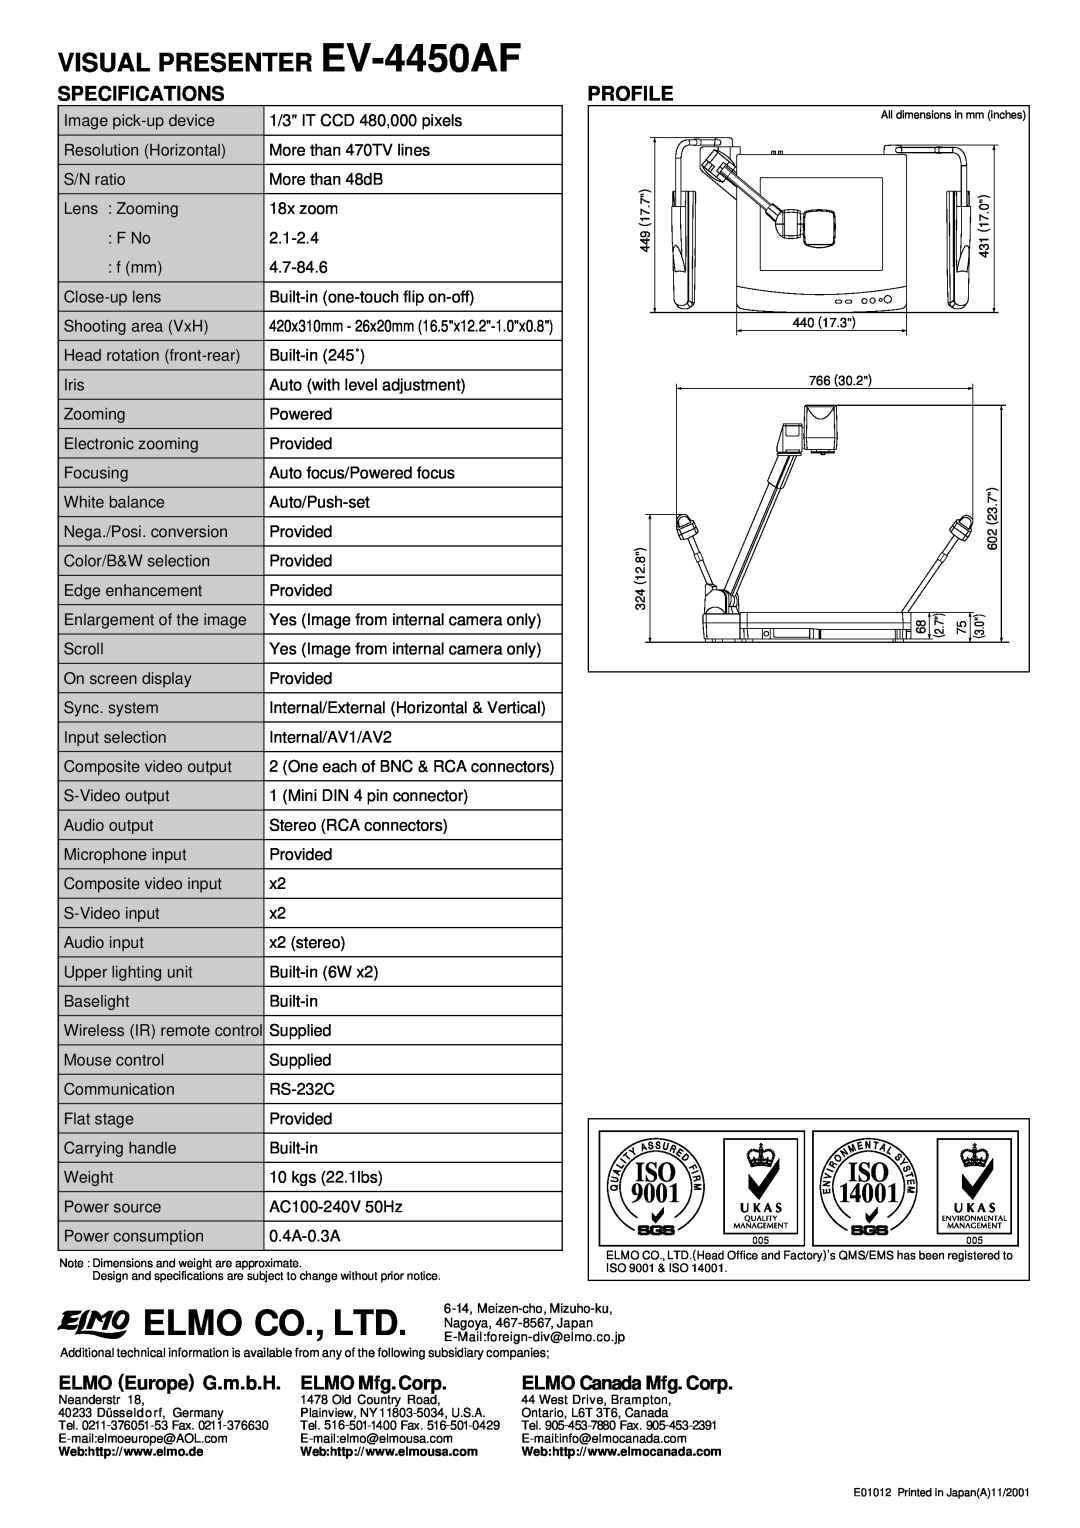 Elmo manual VISUAL PRESENTER EV-4450AF, 9001, 14001, Specifications, Profile, ELMO Europe G.m.b.H, ELMO Mfg. Corp 